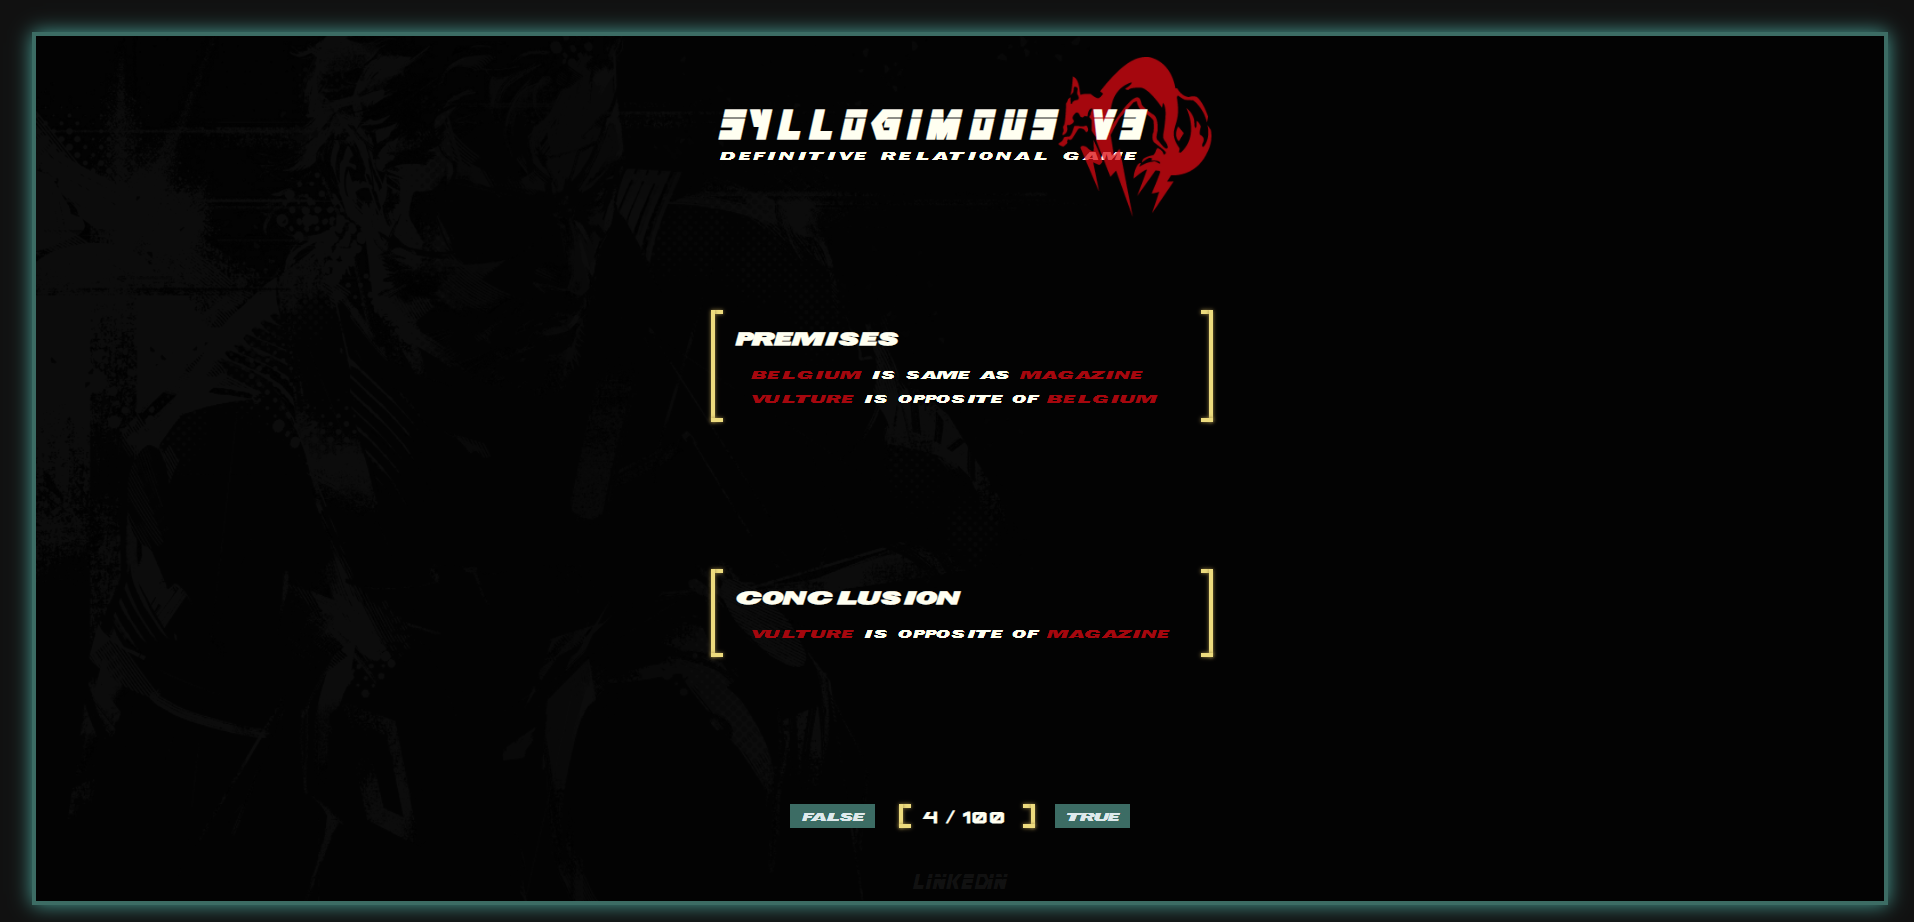 syllogimous-v3-screenshot.png